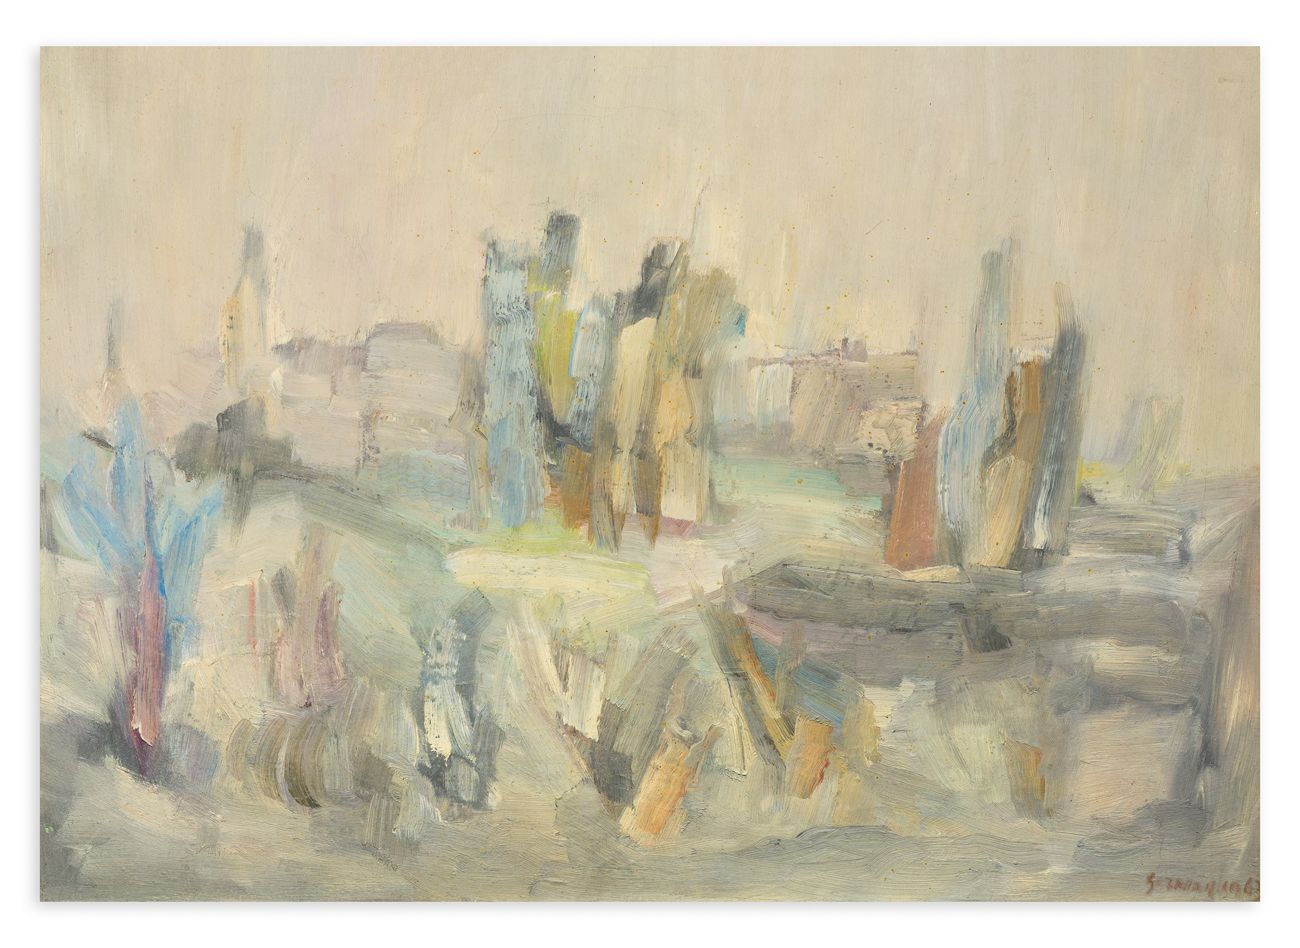 RINO SERNAGLIA (1936) - Paesaggio, 1963 Huile sur toile

cm 50x70

Signature et &hellip;